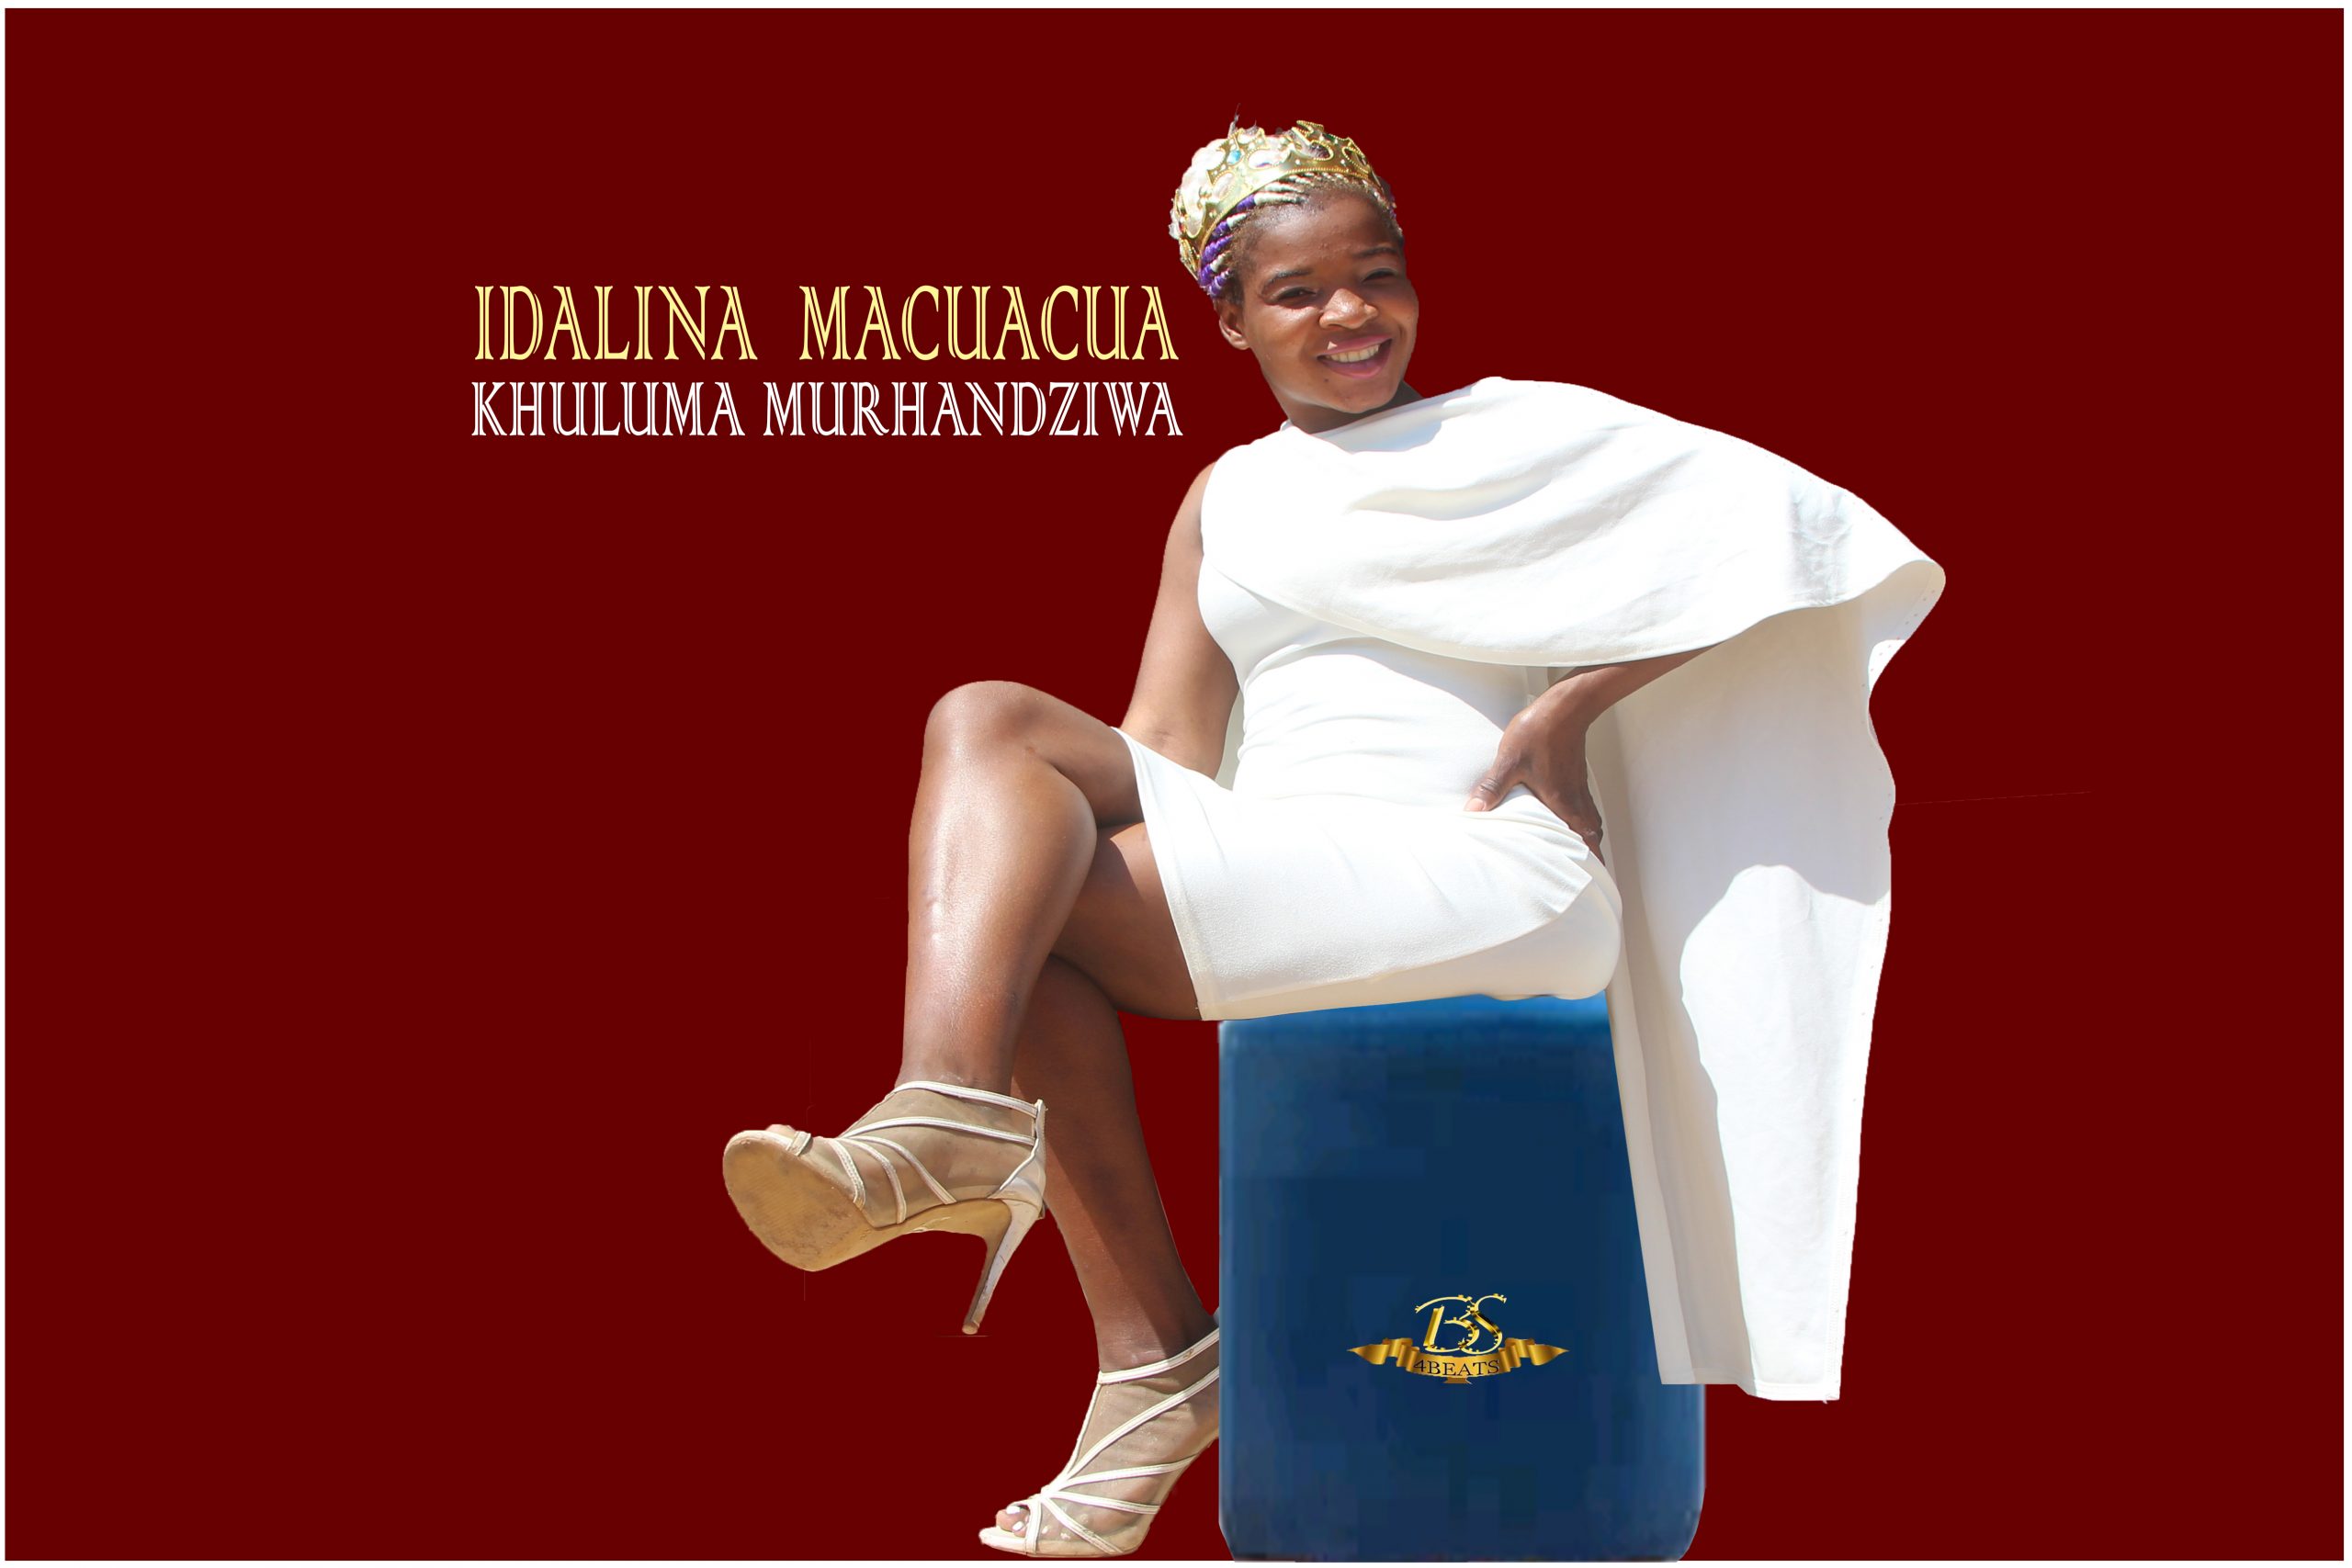 Idalina Macuacua – Khuluma Murandziwa